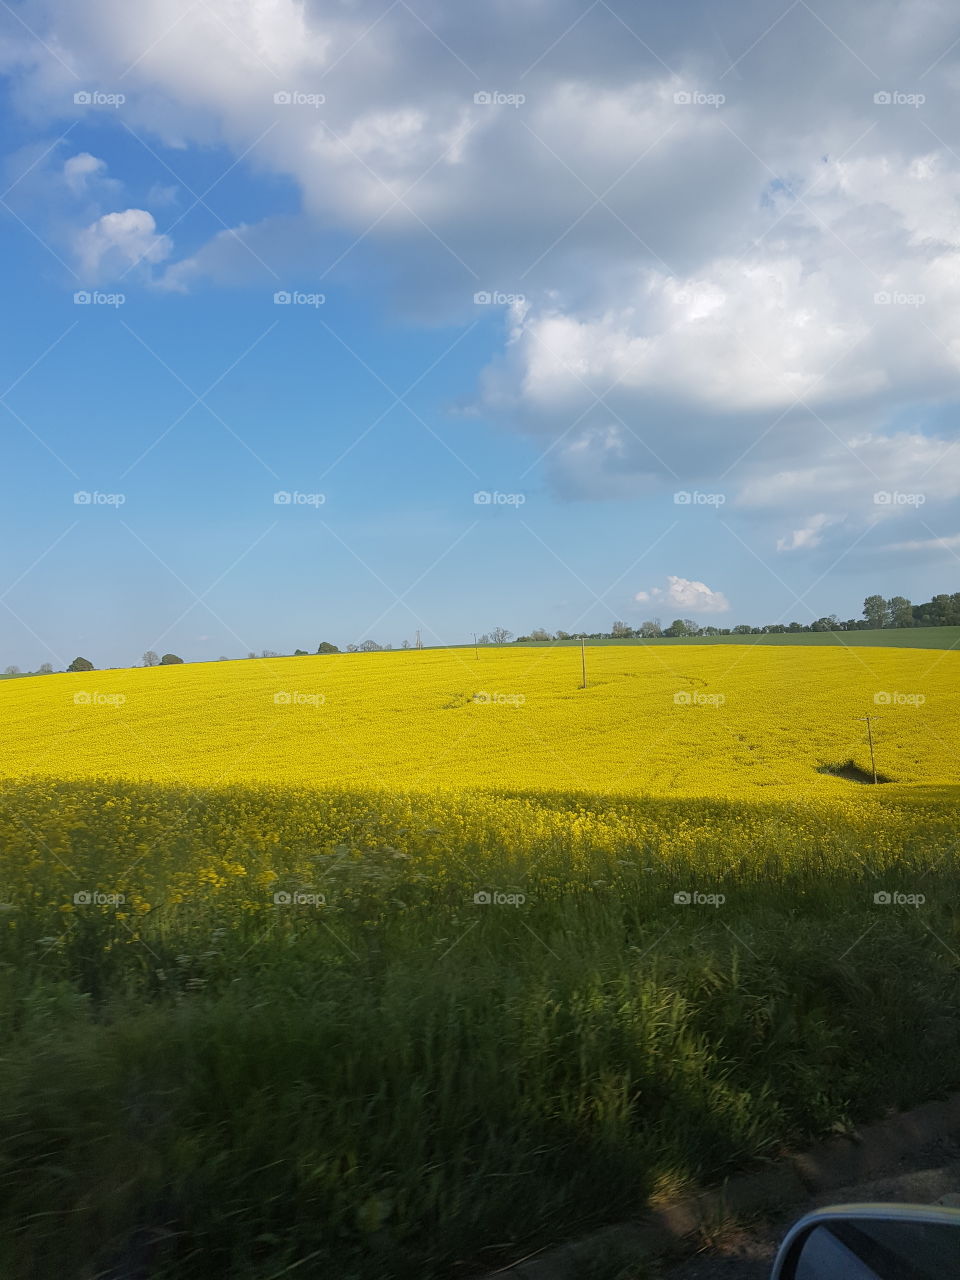 fields of yellow